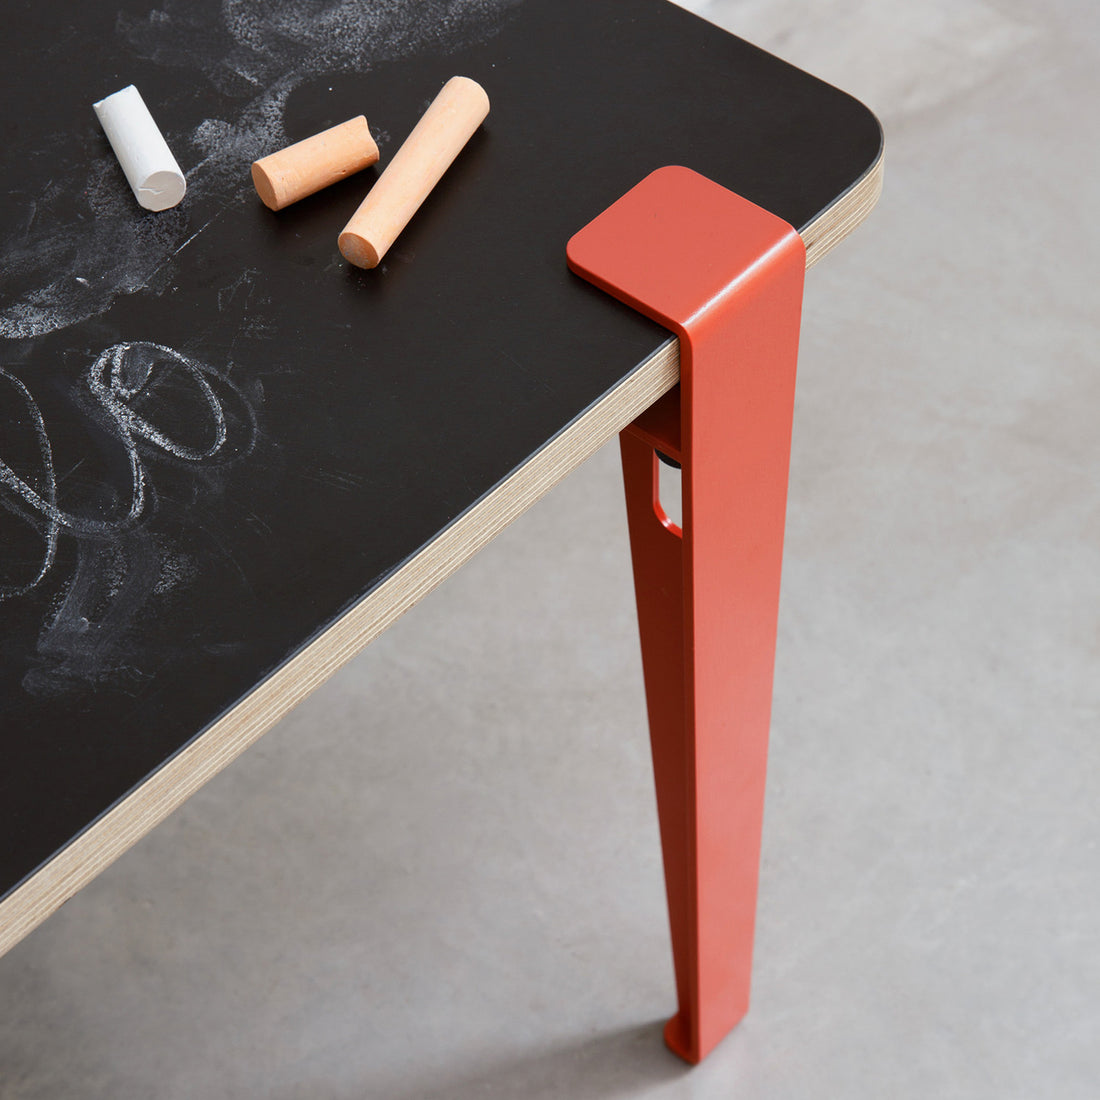 tiptoe-kids-desk-virce-versa-blackboard-&-white-tabletop-with-legs-flamingo-pink-70x50cm-tipt-stt07005023p02-tle050st1mz63 (5)